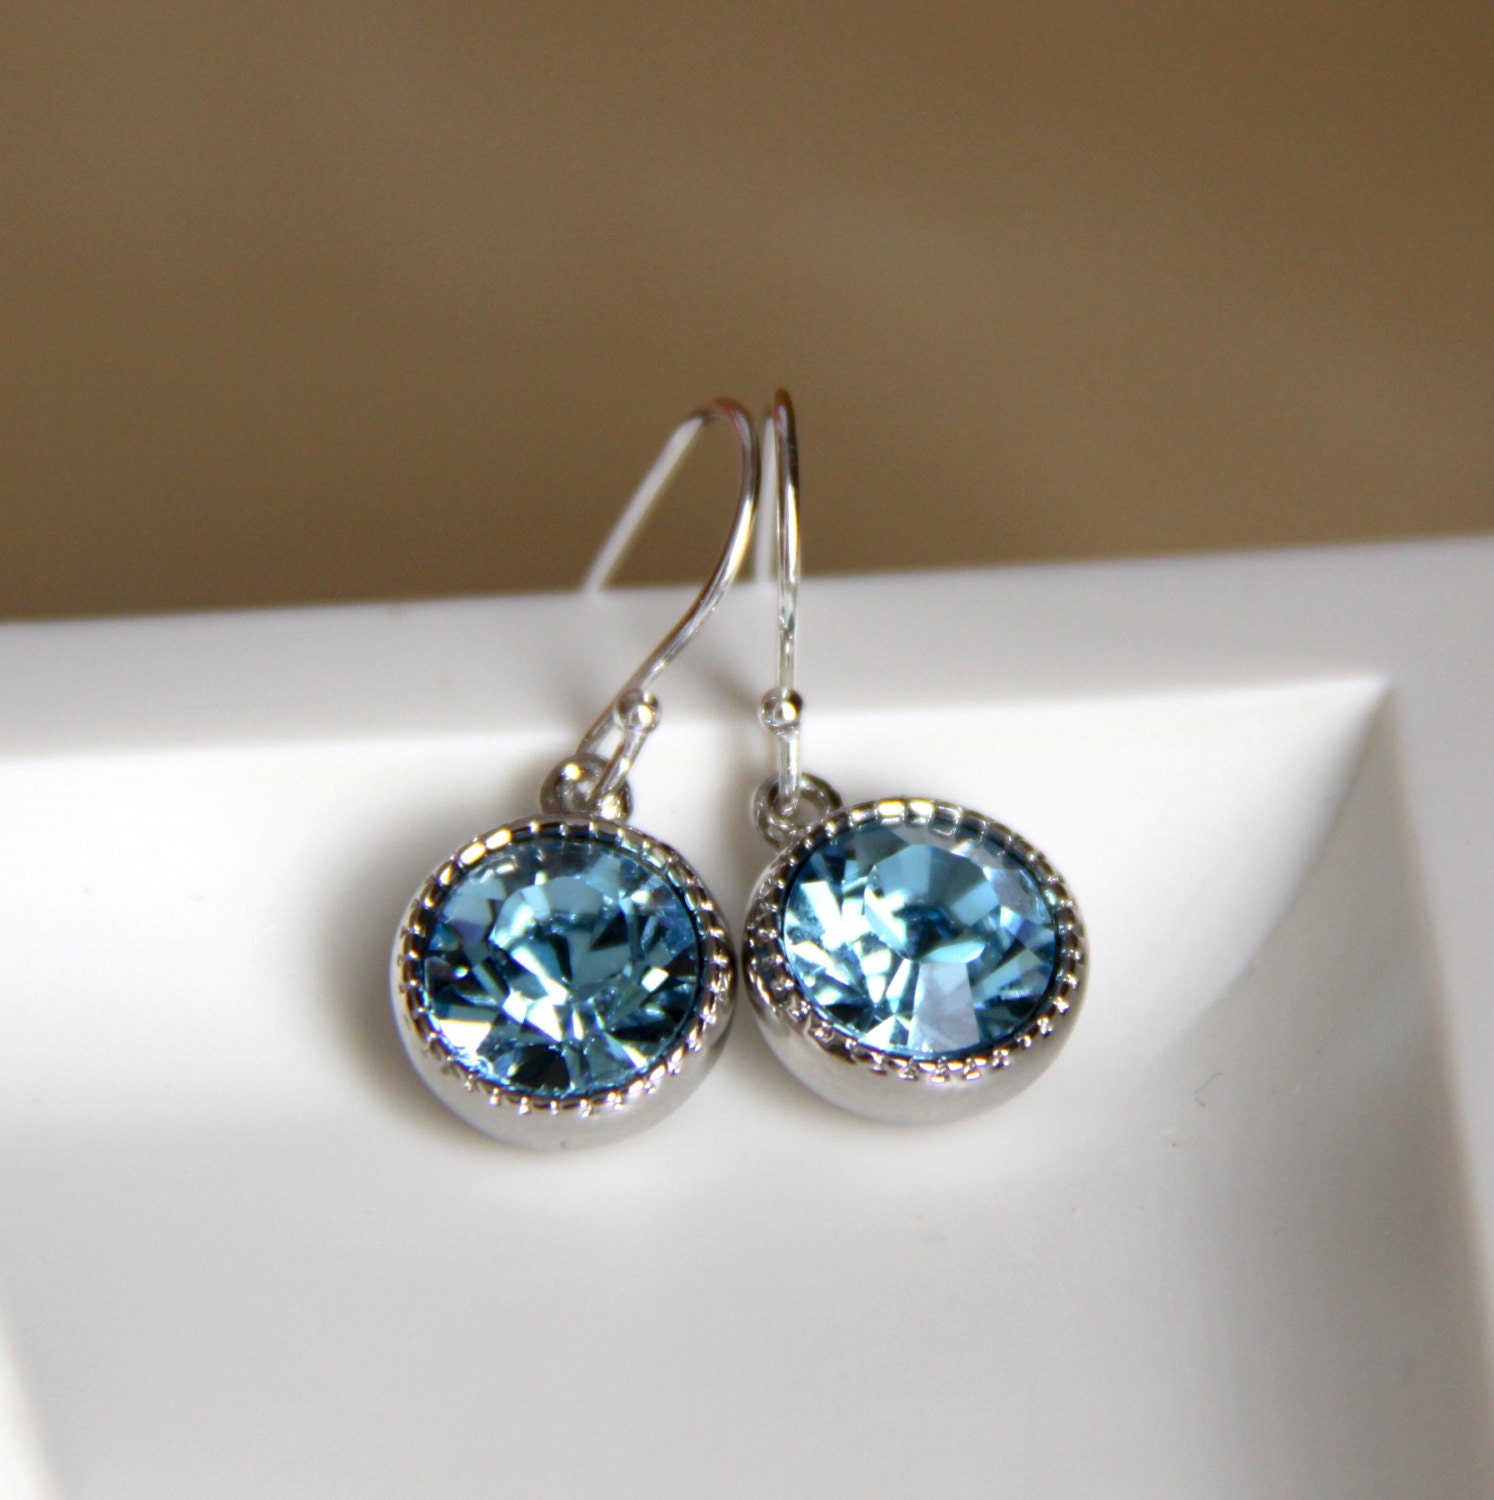 Blue Swarovski Earrings Sparkly Crystal Earrings Gifts for